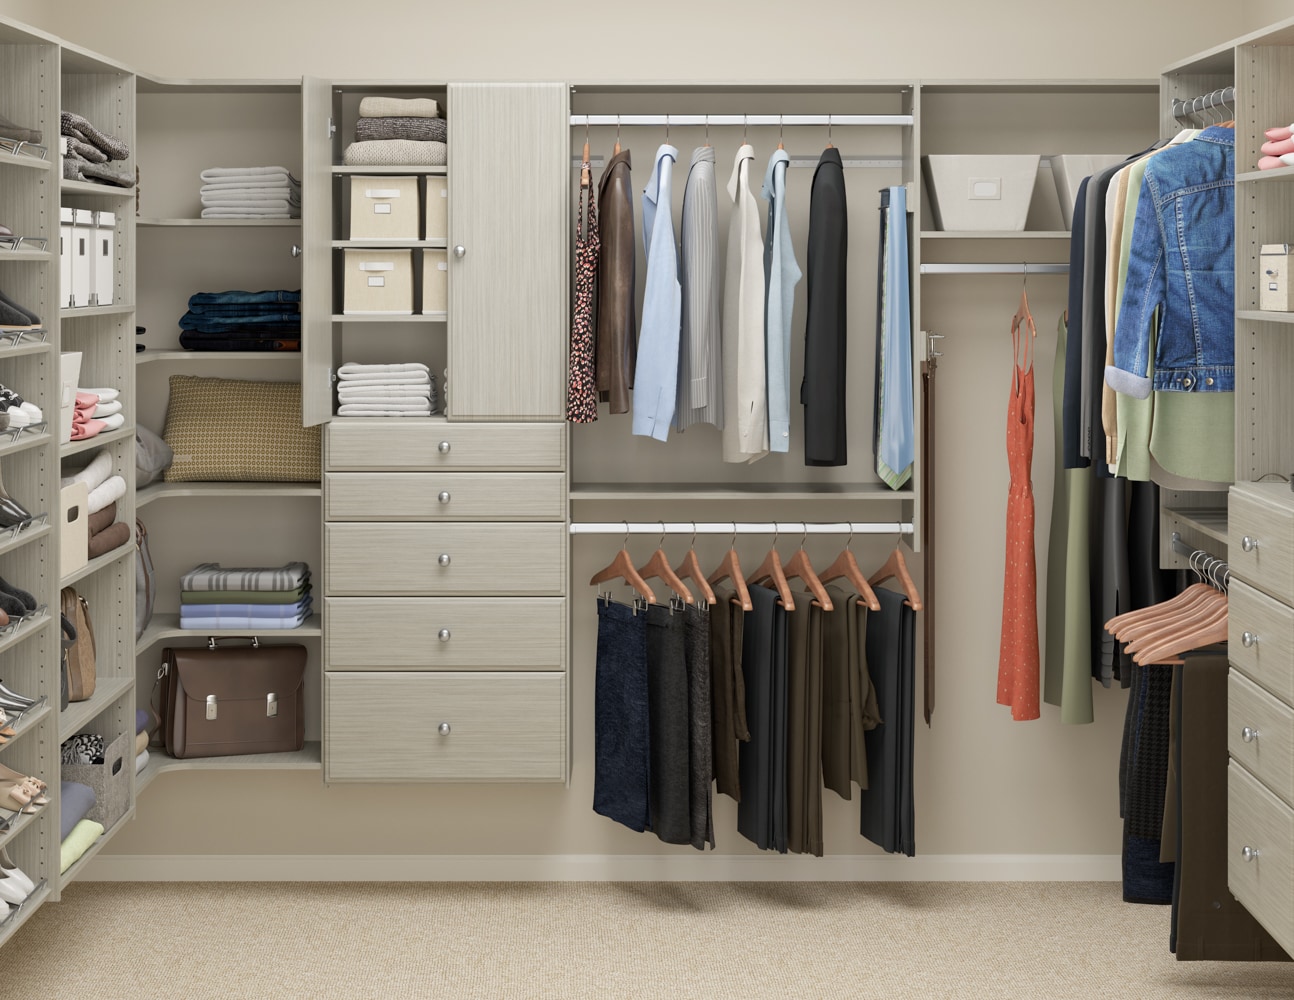 Organized Closet in 5 Easy Steps • Everyday Cheapskate